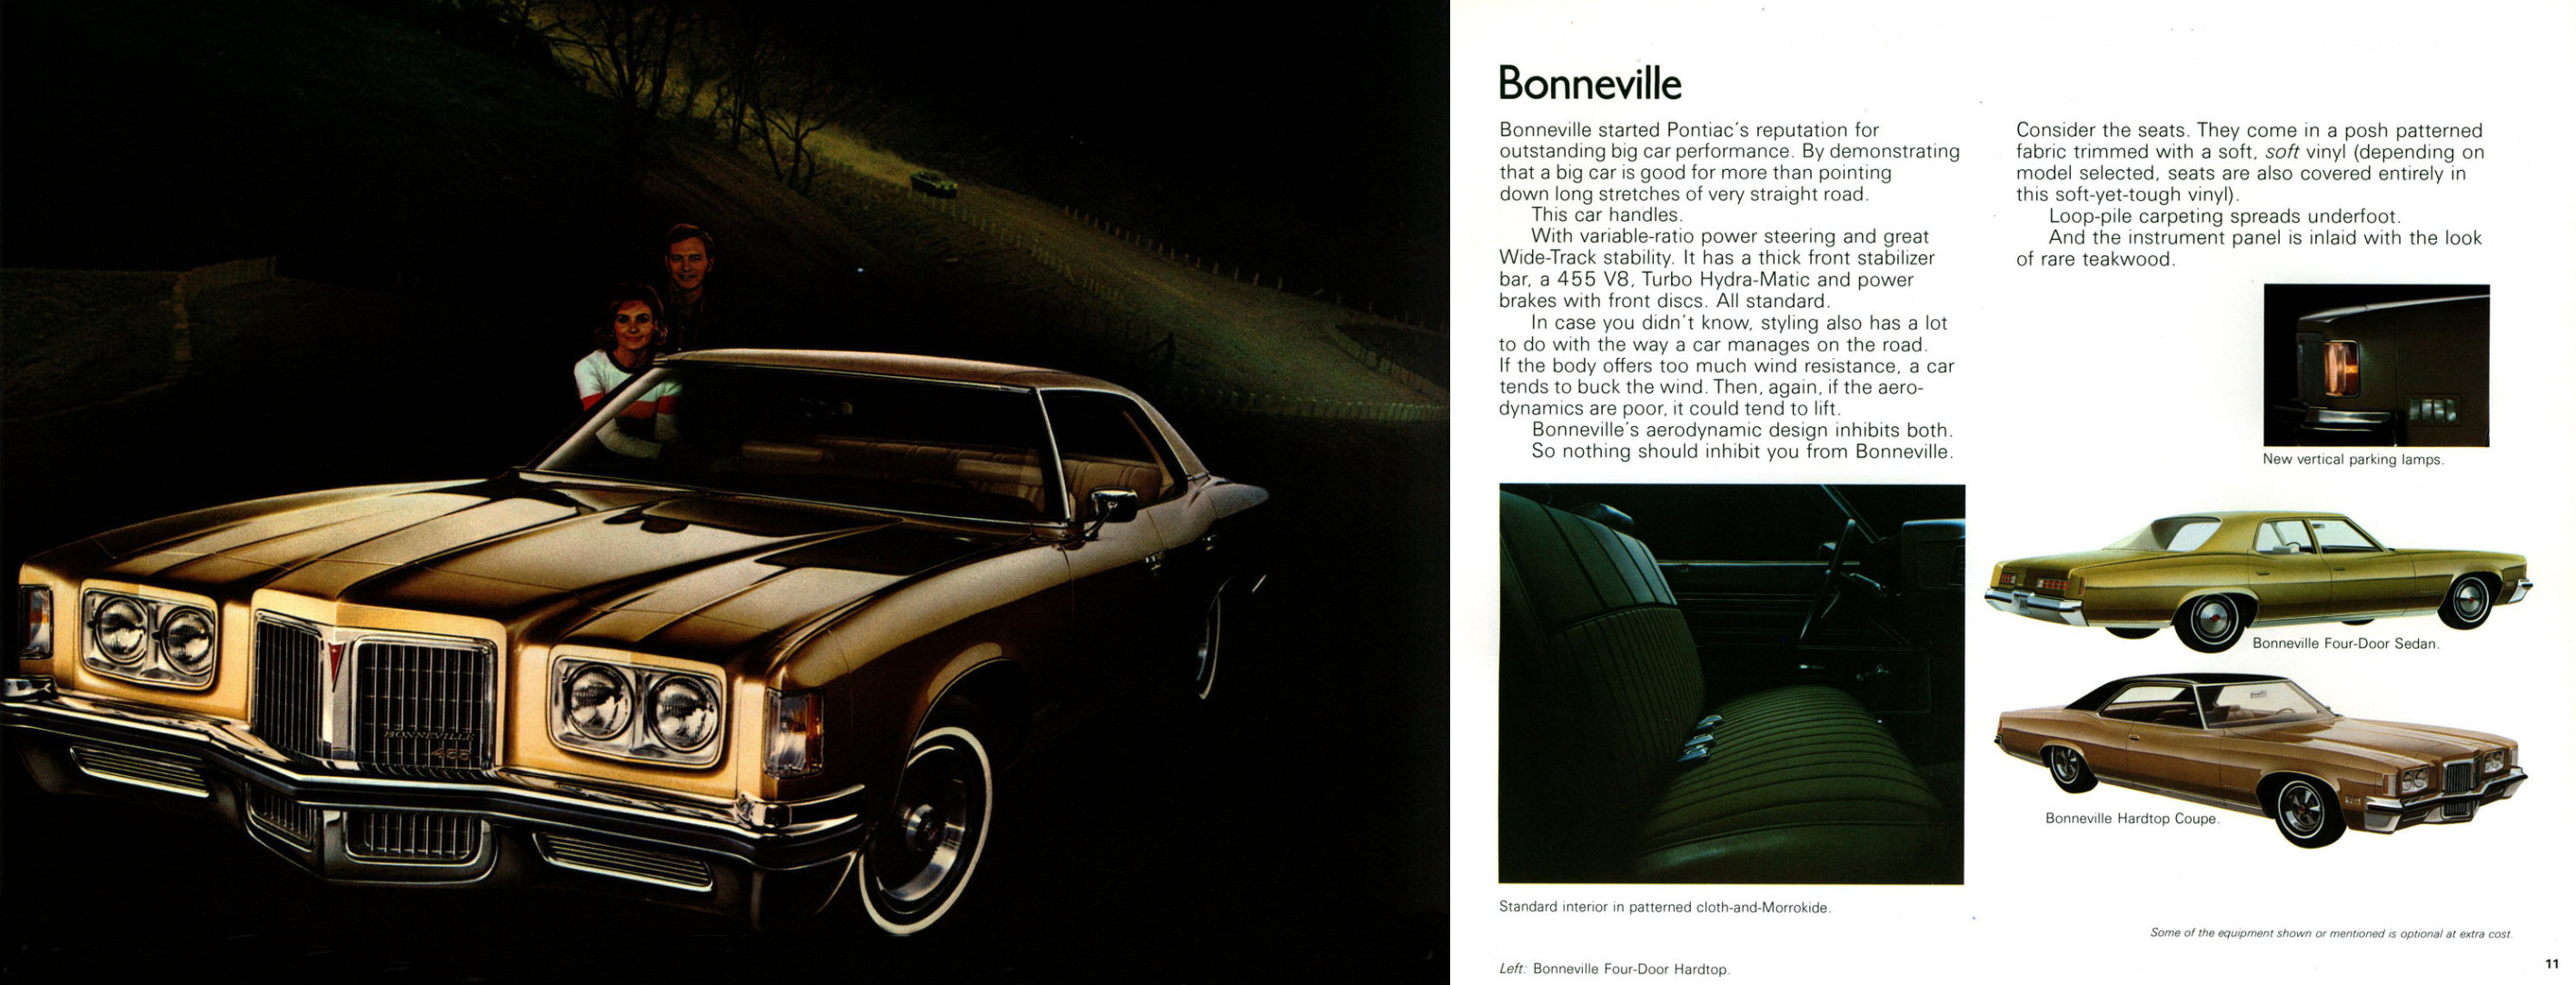 1972_Pontiac_Full_Size_Cdn-10-11